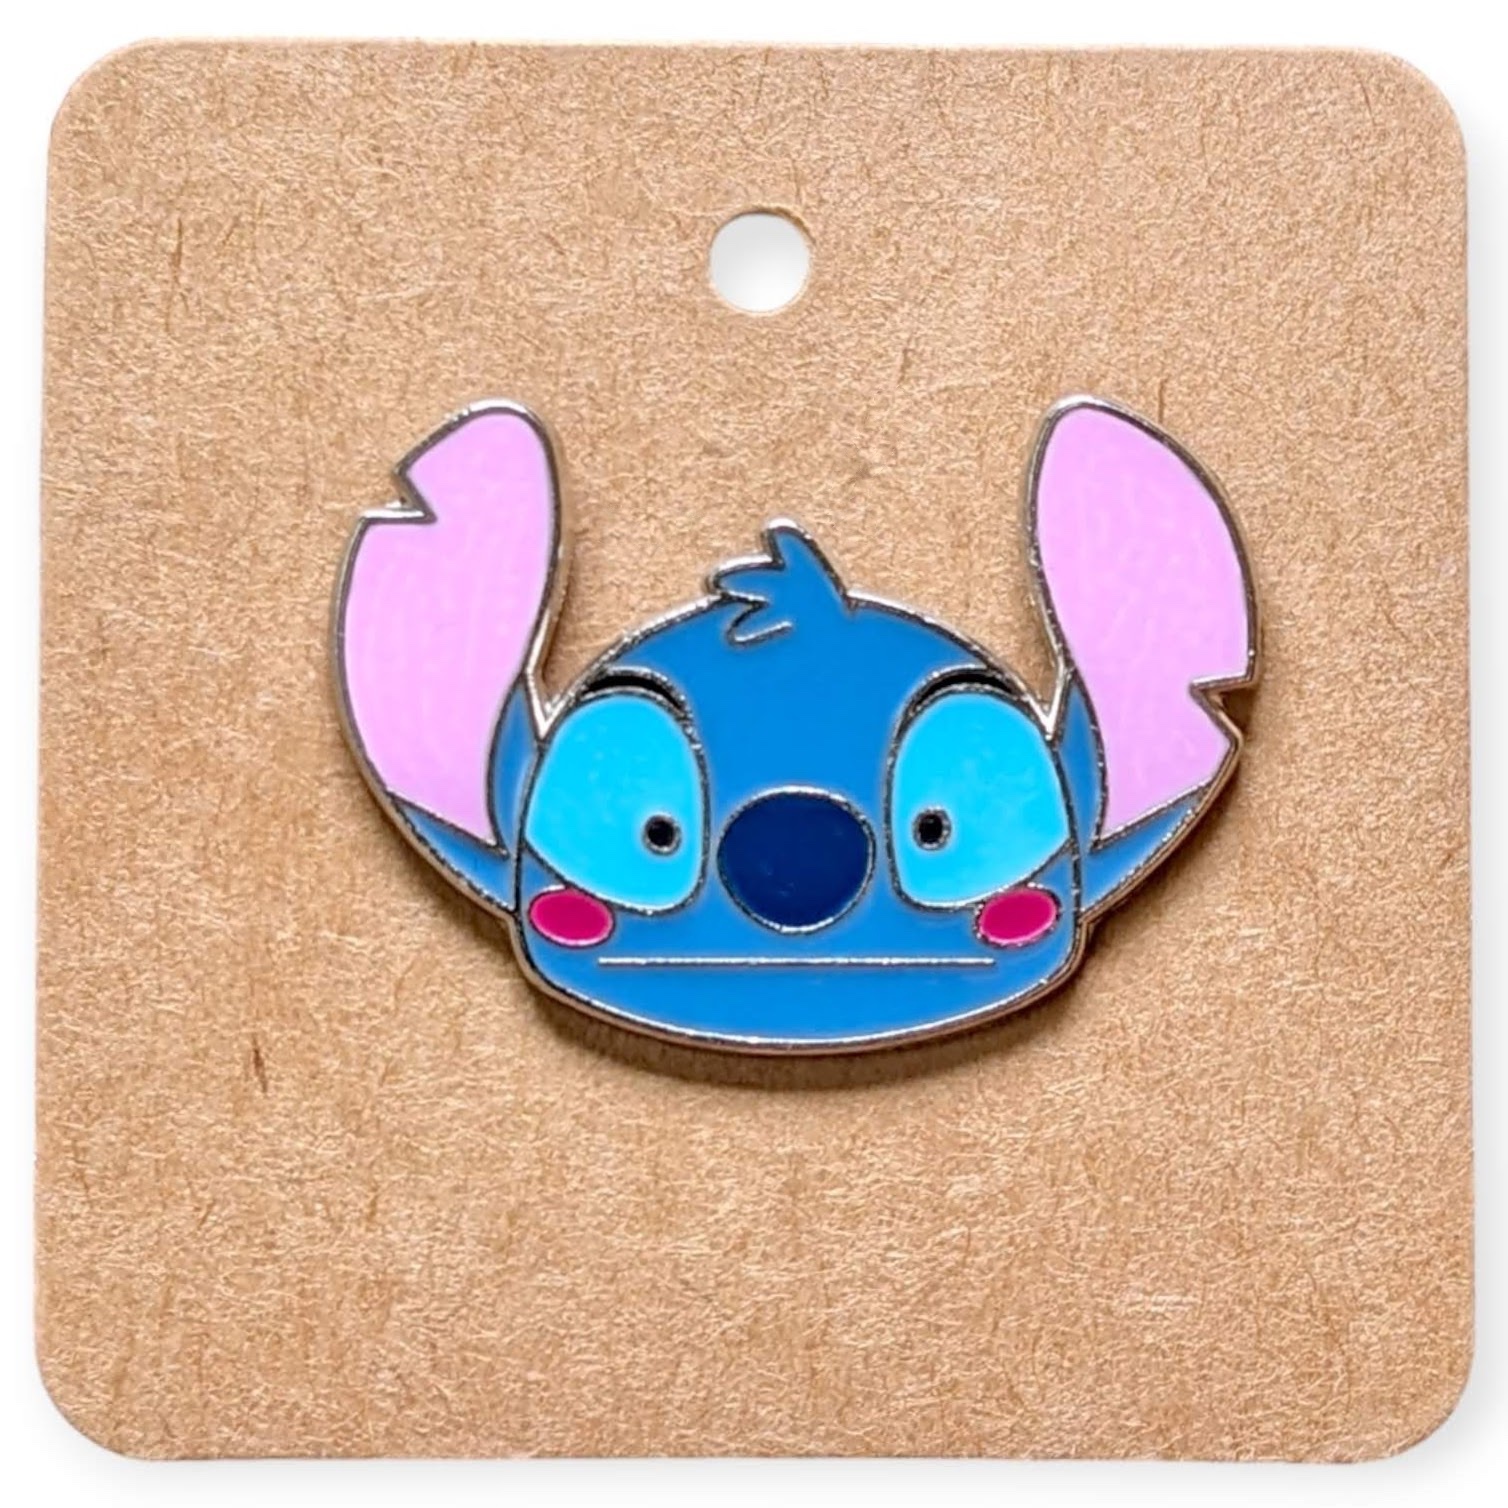 Primary image for Lilo and Stitch Disney Pin: Stitch Embarrassed, Surprised Emoji